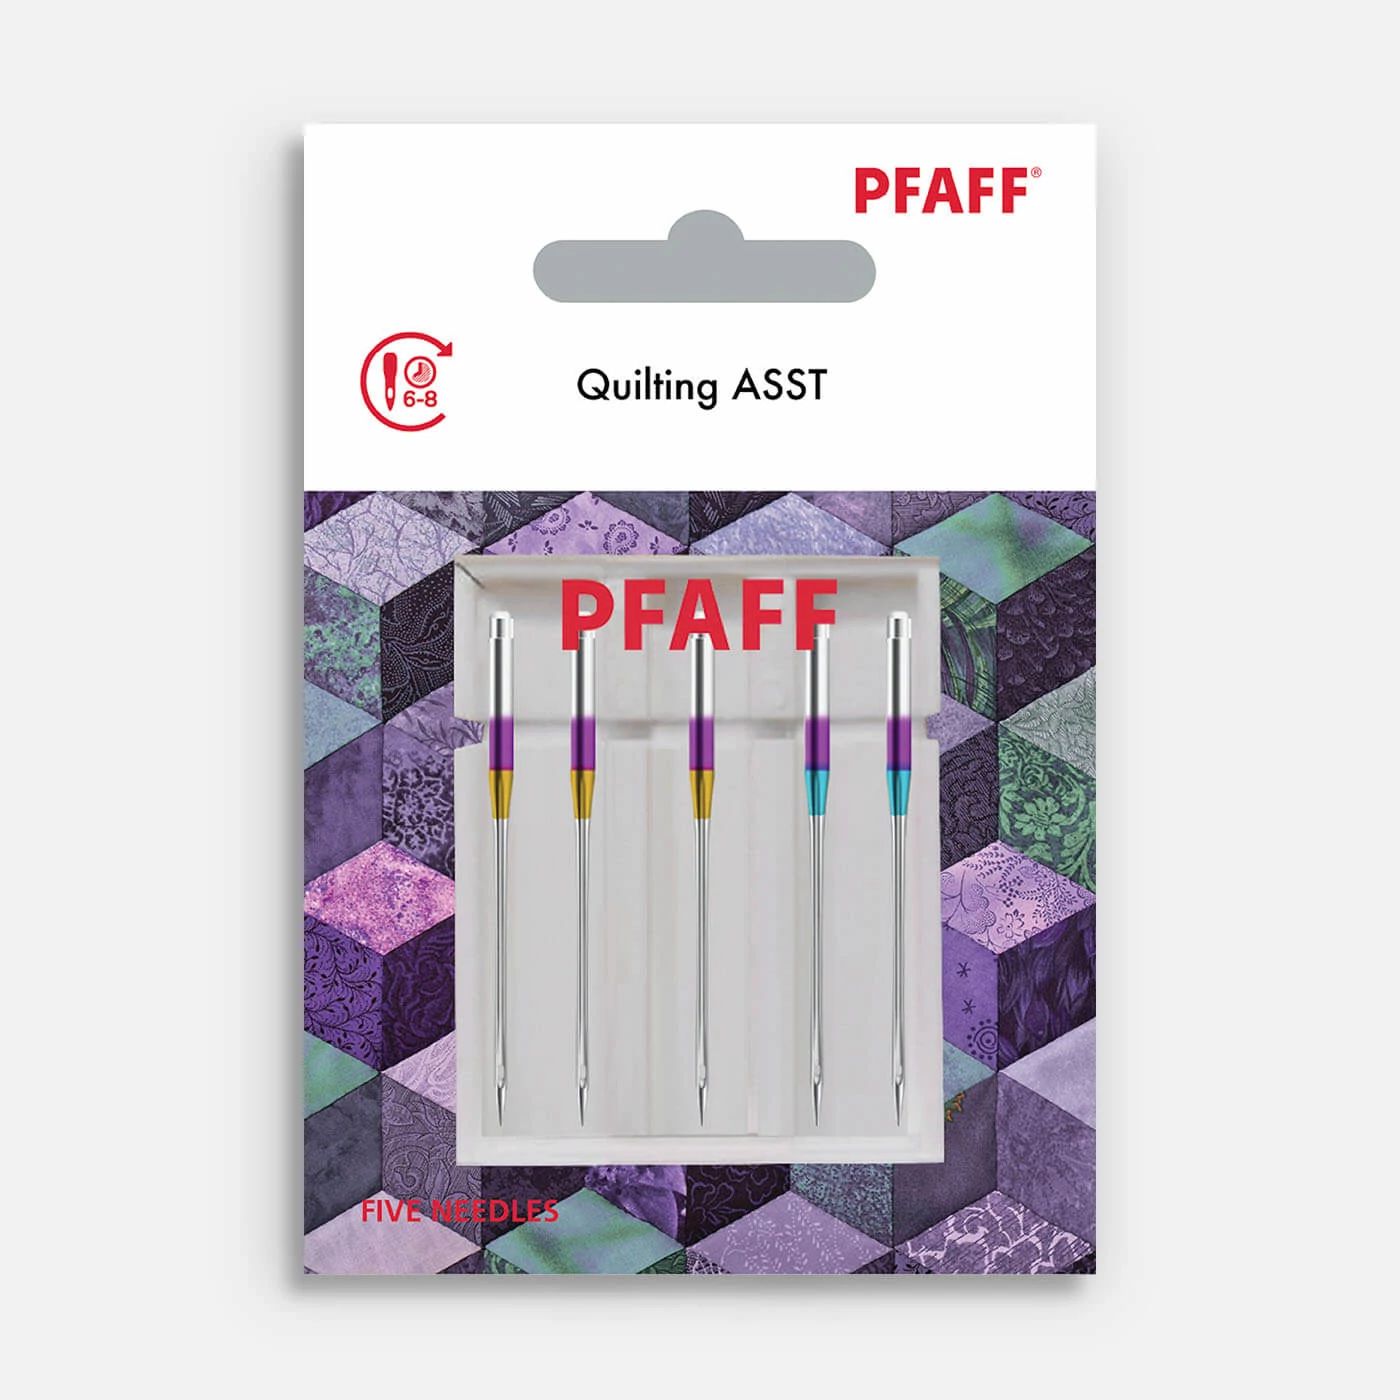 Shop Best of PFAFF Needles 4-Pack